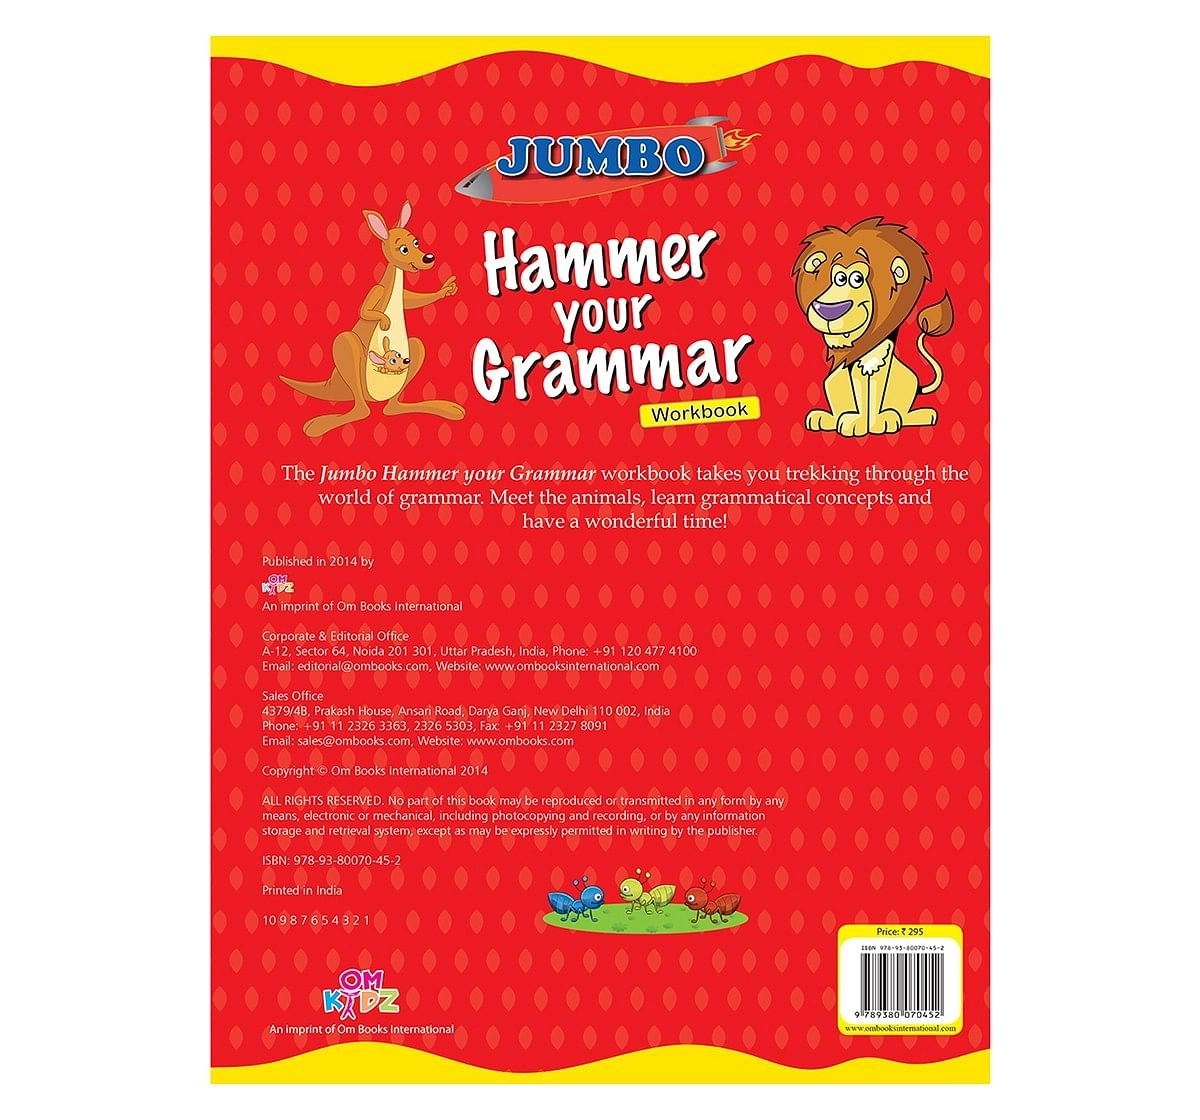 Grammer : Jumbo Hammer Your Grammer Activity Workbook, 128 Pages Book, Paperback